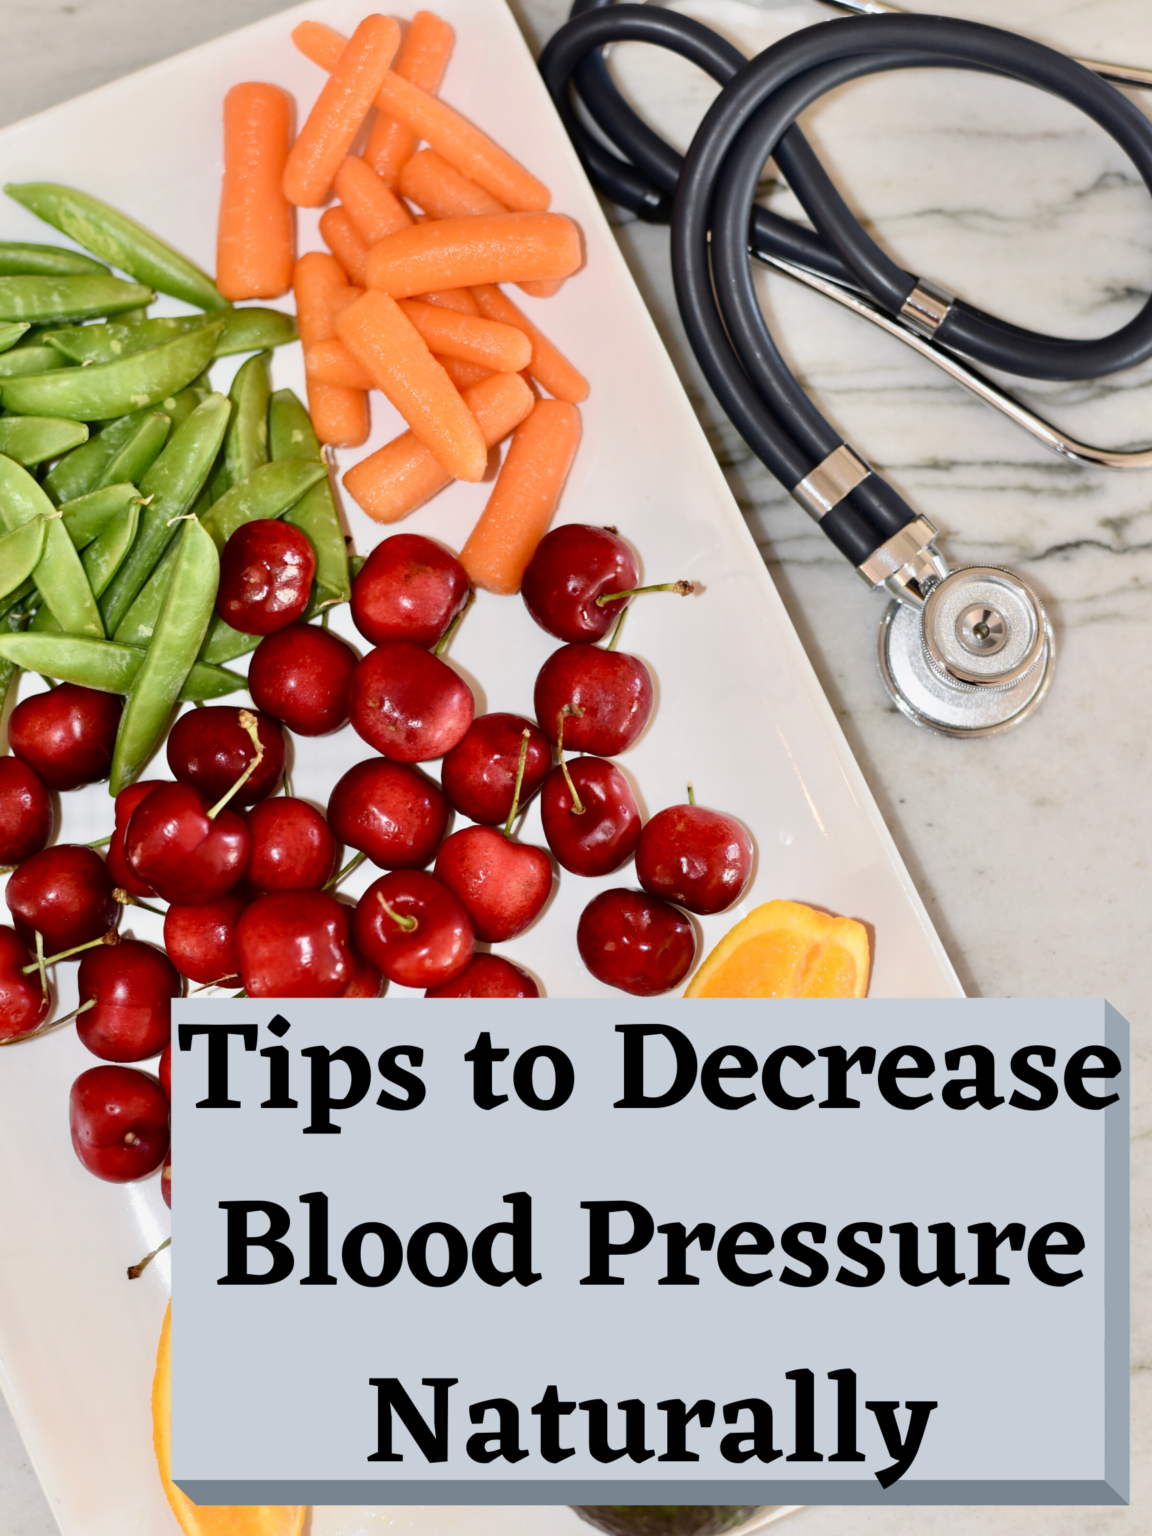 Natural Ways to Decrease Blood Pressure